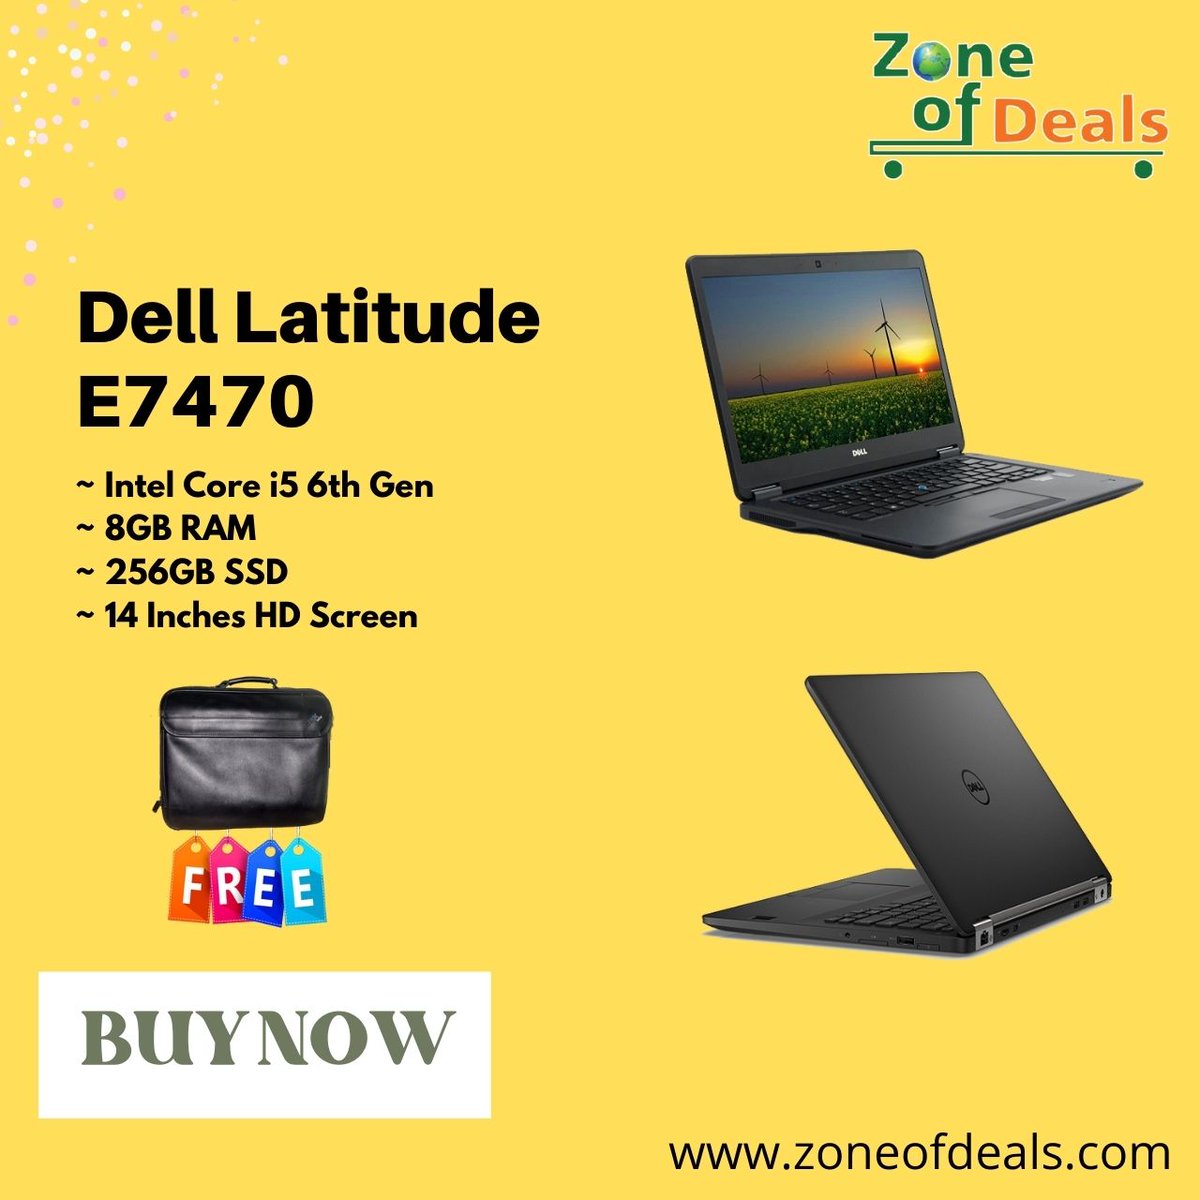 Dell E7470 Core i5 6th Gen 8GB+256GB SSD - Refurbished Laptop Excellent New Condition.
COD Also Available.
Safe Shipping Through Reputed Courier Services.
#dell7270 #dellcorei7laptop #delllatitude #dellinspiron15 #refurbishedlaptops #laptopsforstudents #delllaptops #corei7 #work